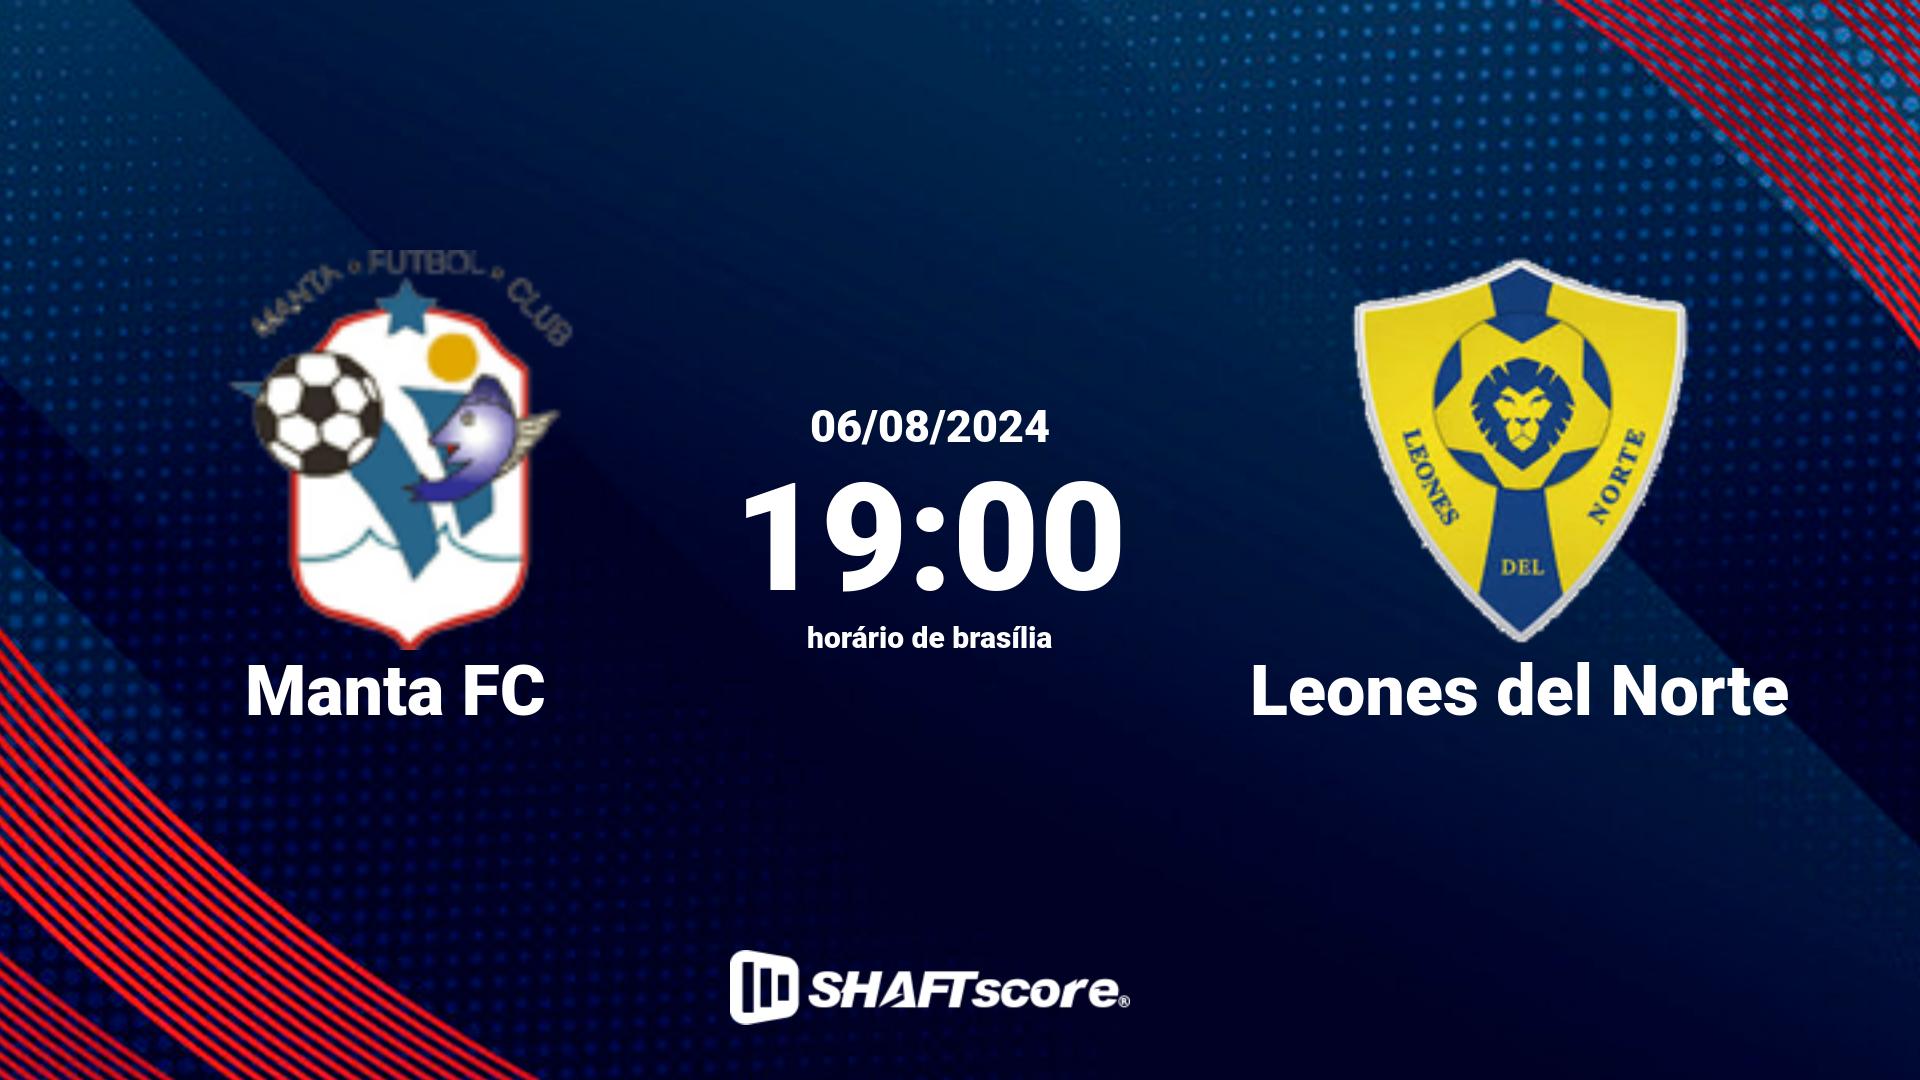 Estatísticas do jogo Manta FC vs Leones del Norte 06.08 19:00